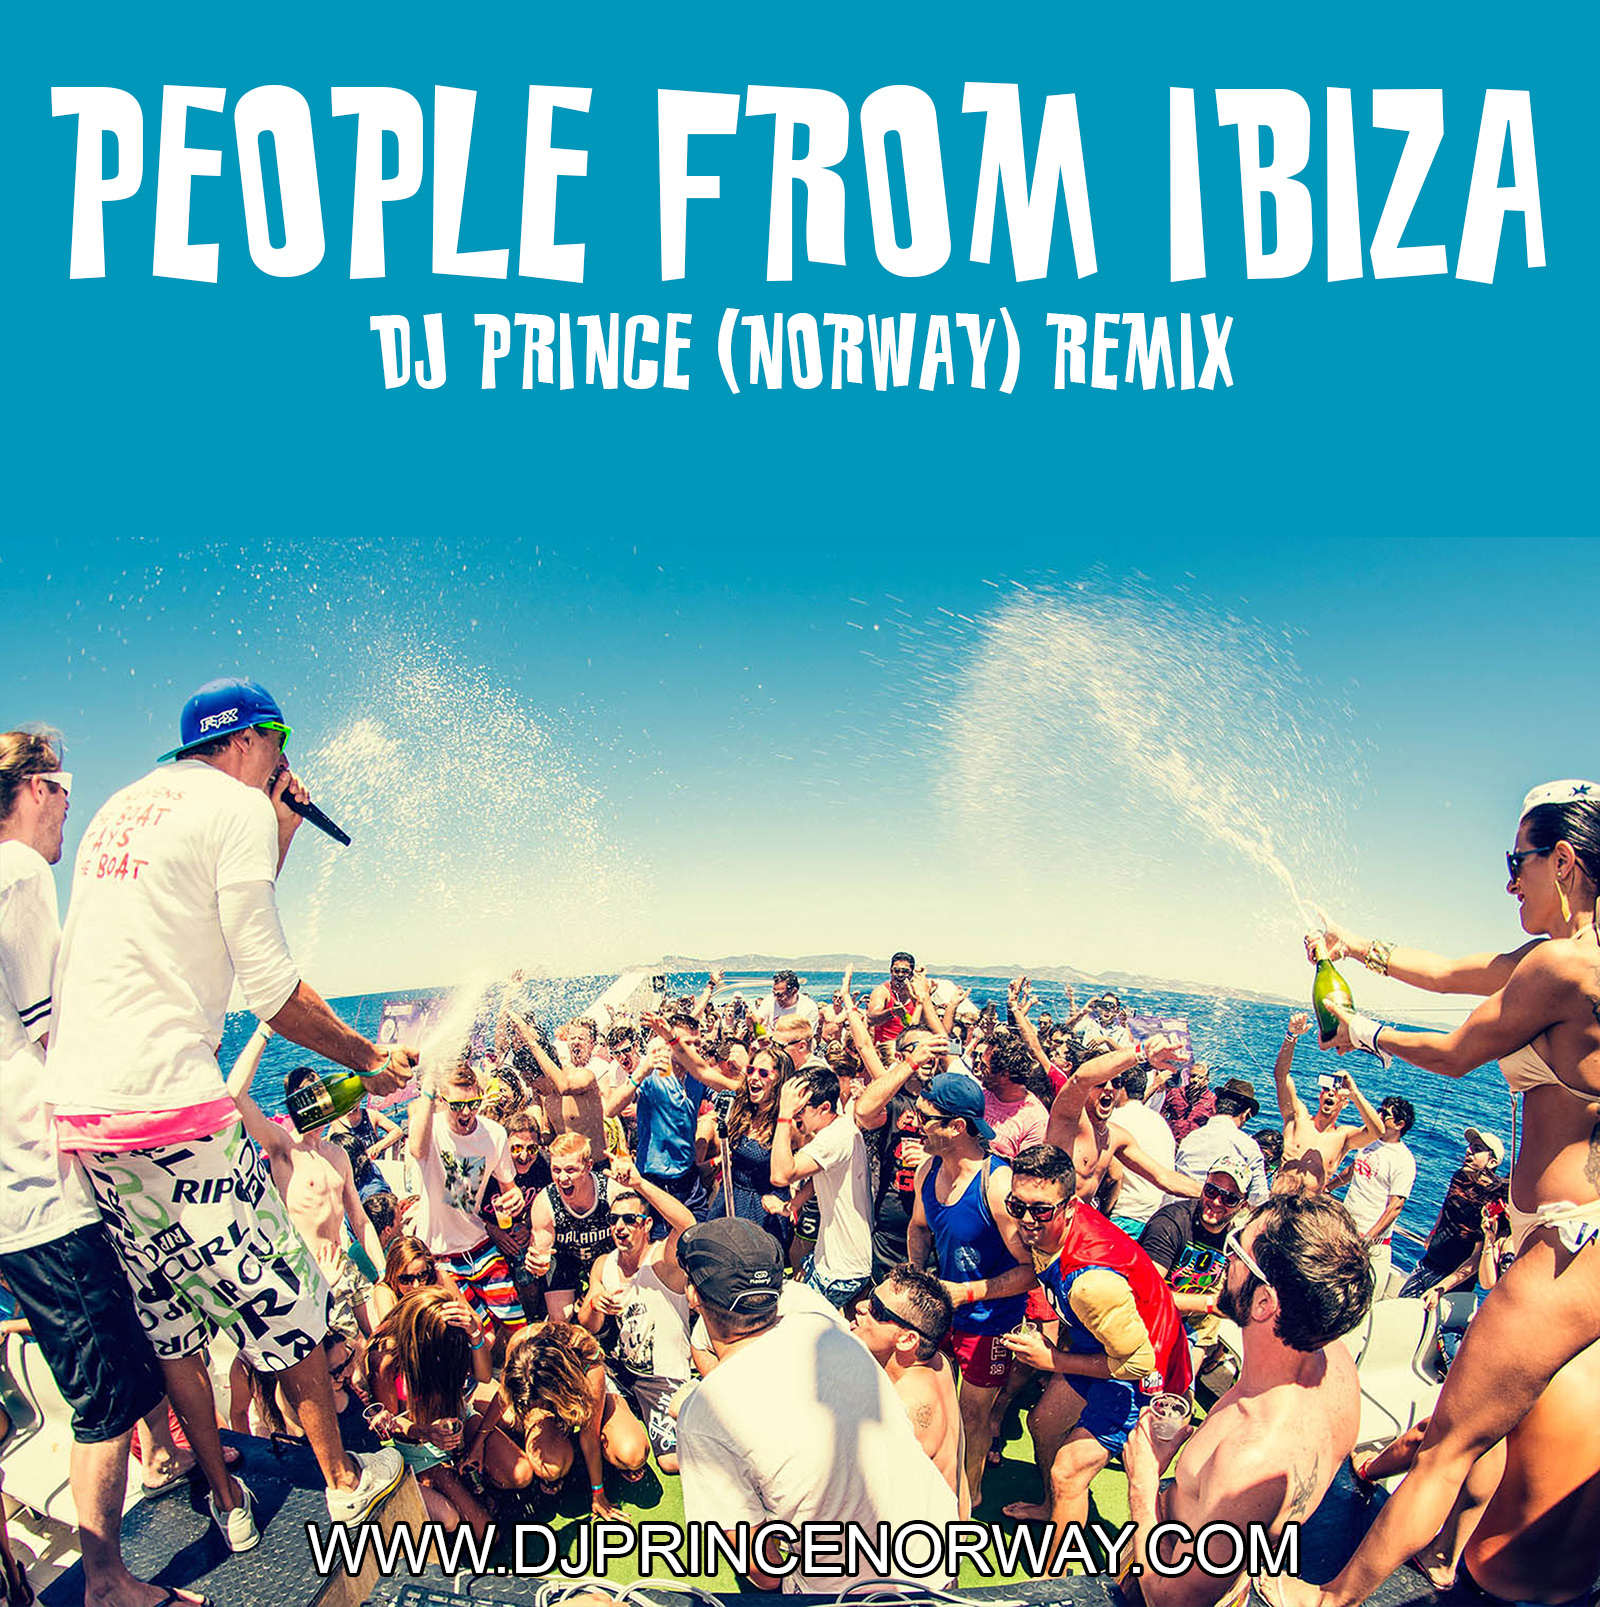 Sandy Marton - People From Ibiza (DJ Prince, Norway Remix)